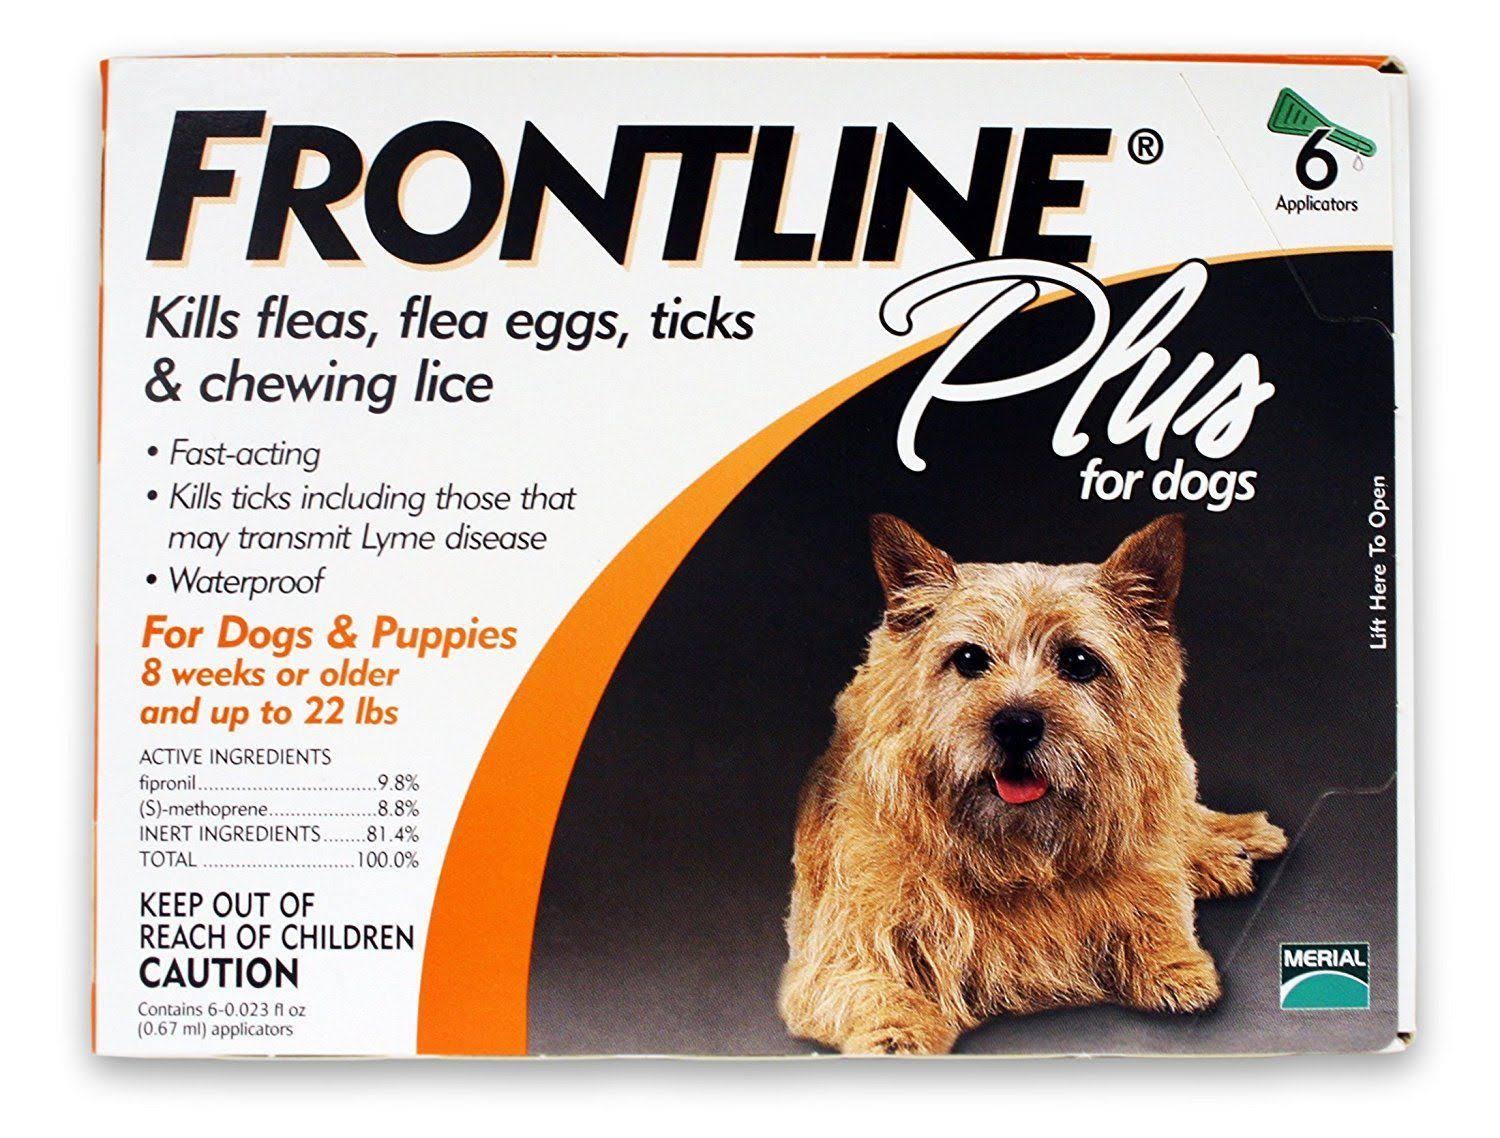 Frontline Plus Dog Flea Drops - 0.023oz, 3ct